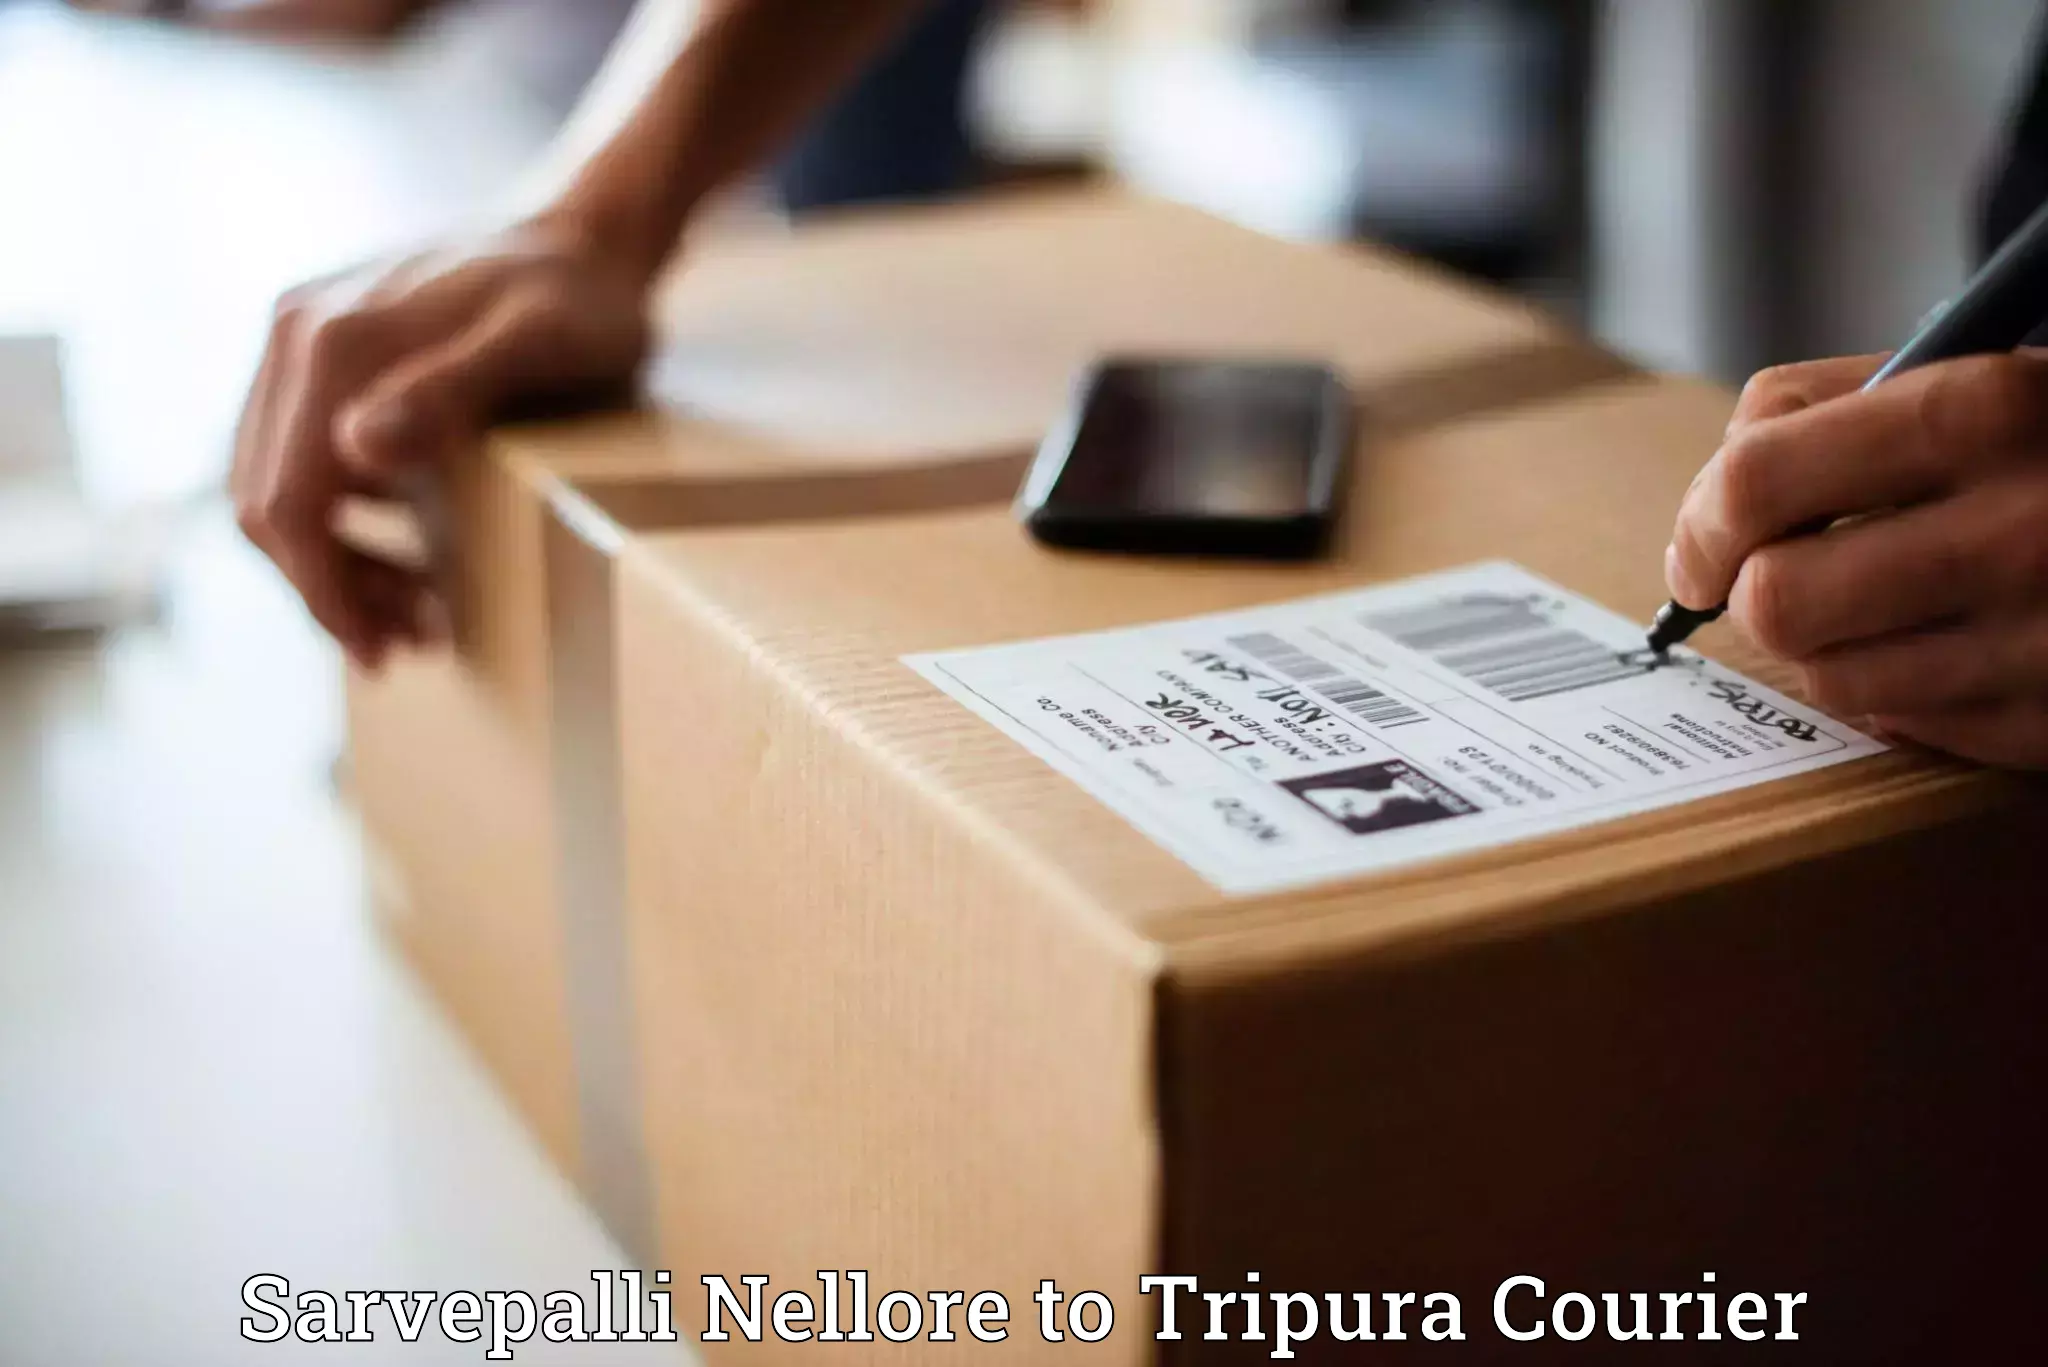 Reliable logistics providers Sarvepalli Nellore to Udaipur Tripura